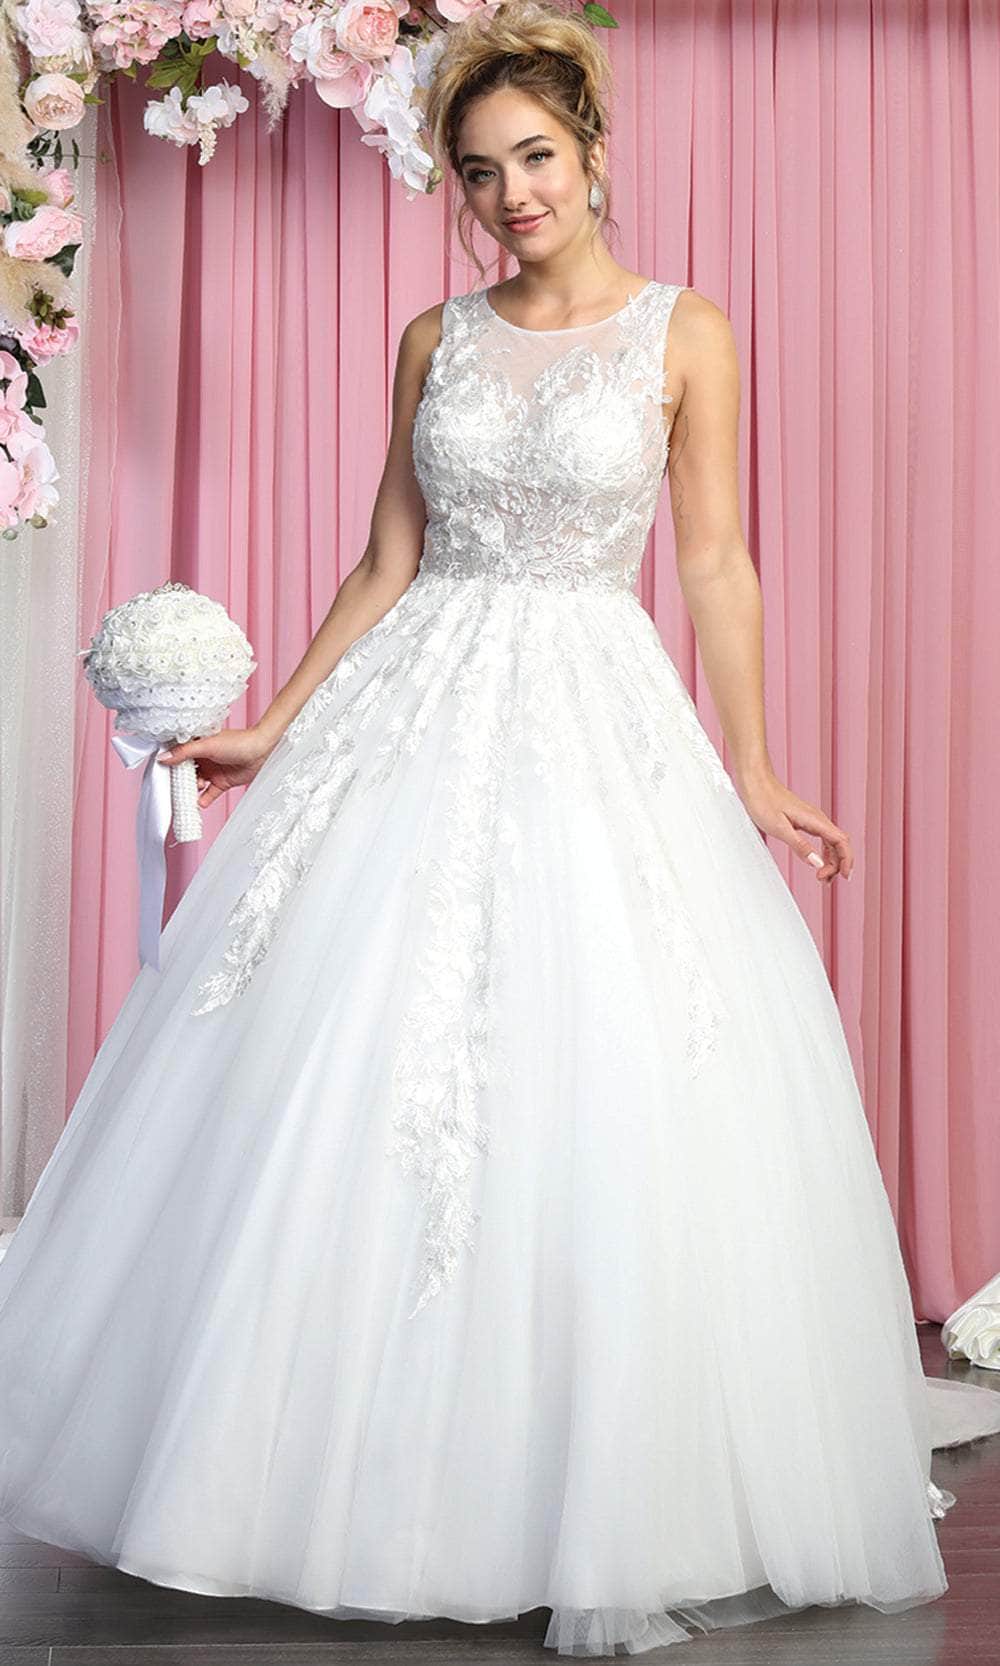 May Queen RQ7900 - Sleeveless Illusion Jewel Neckline Wedding Dress
